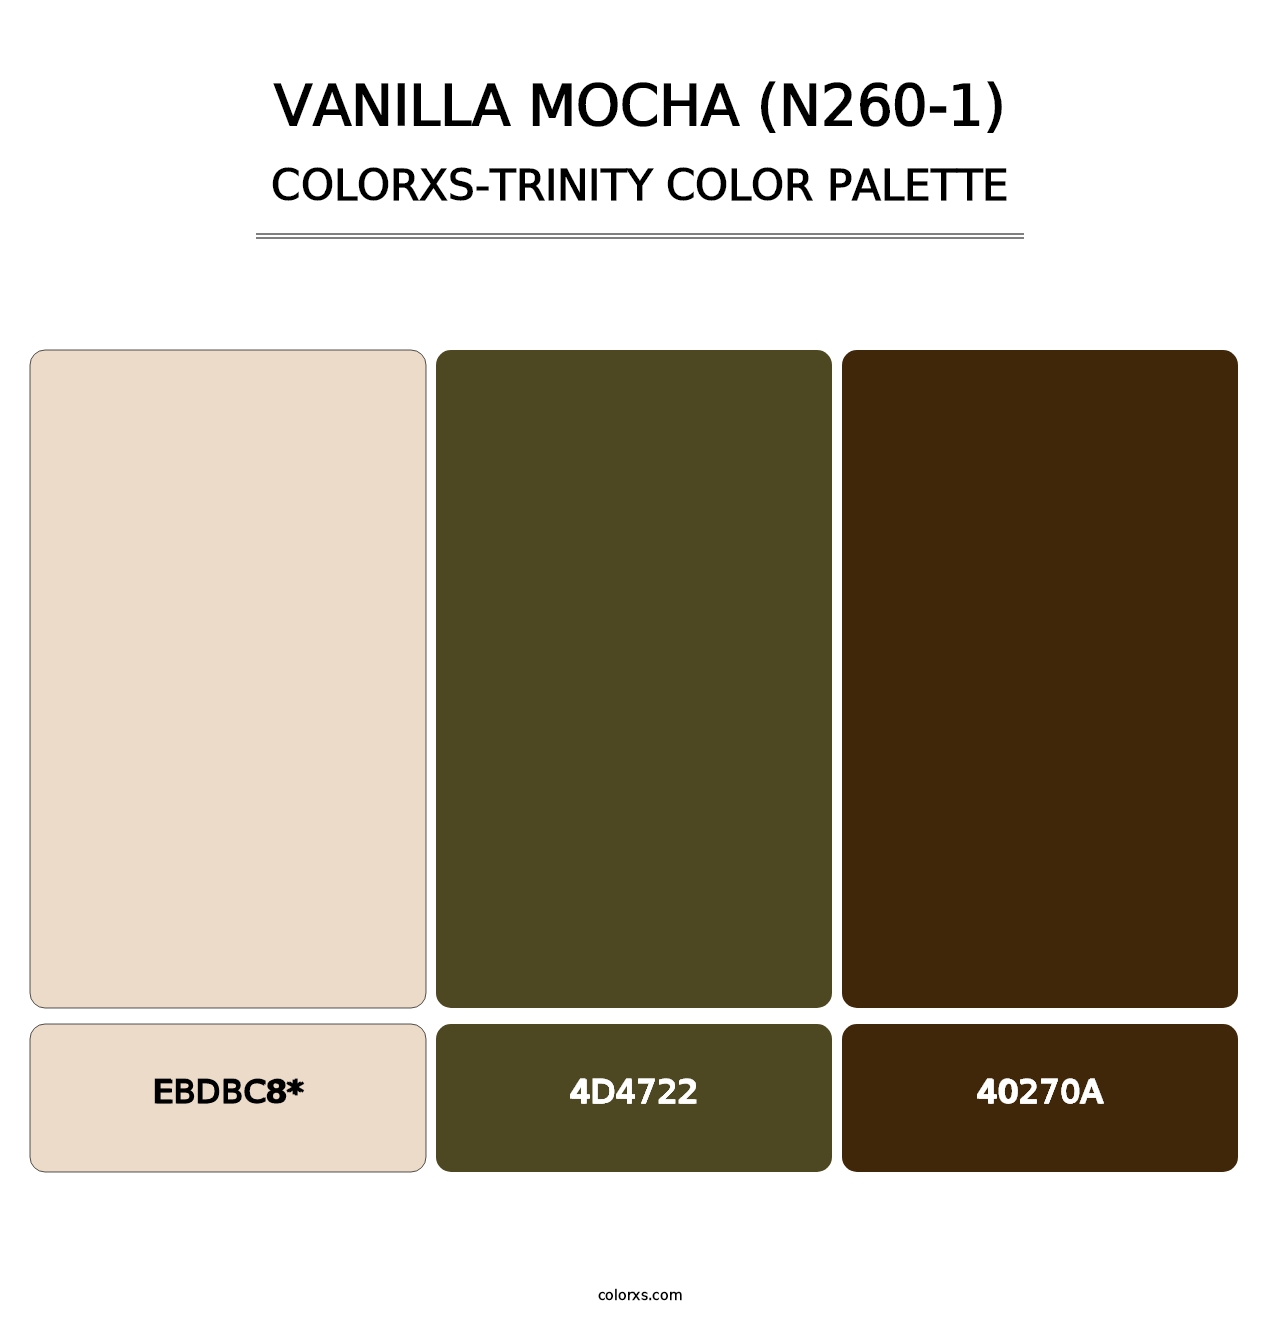 Vanilla Mocha (N260-1) - Colorxs Trinity Palette